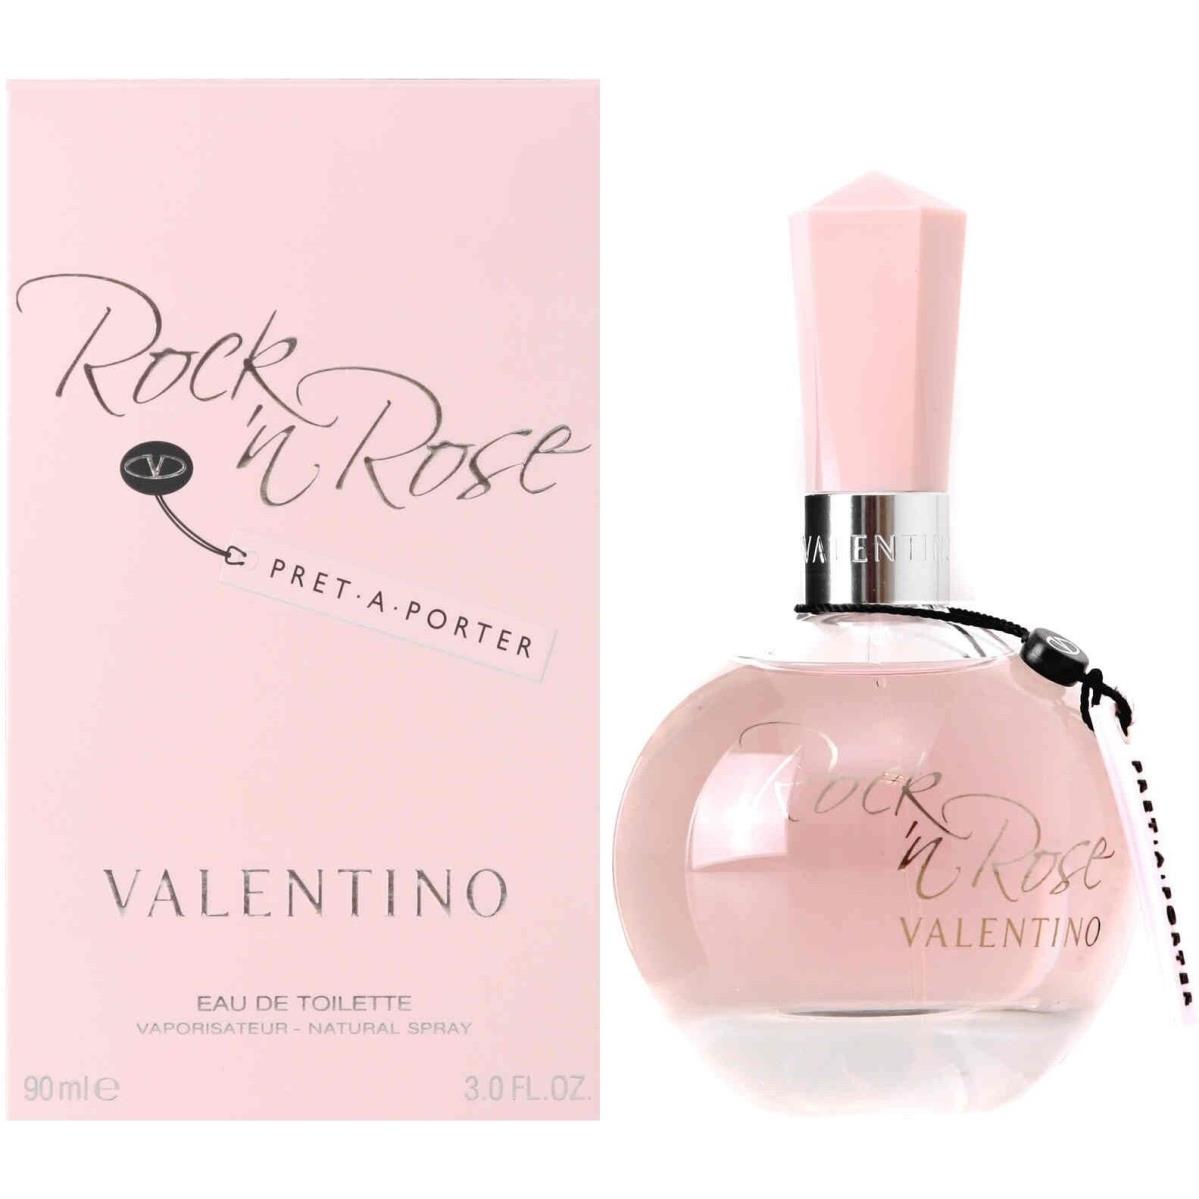 Rock `n Rose Pret A Porter Valentino For Women 1.7 oz Eau de Toilette Spray